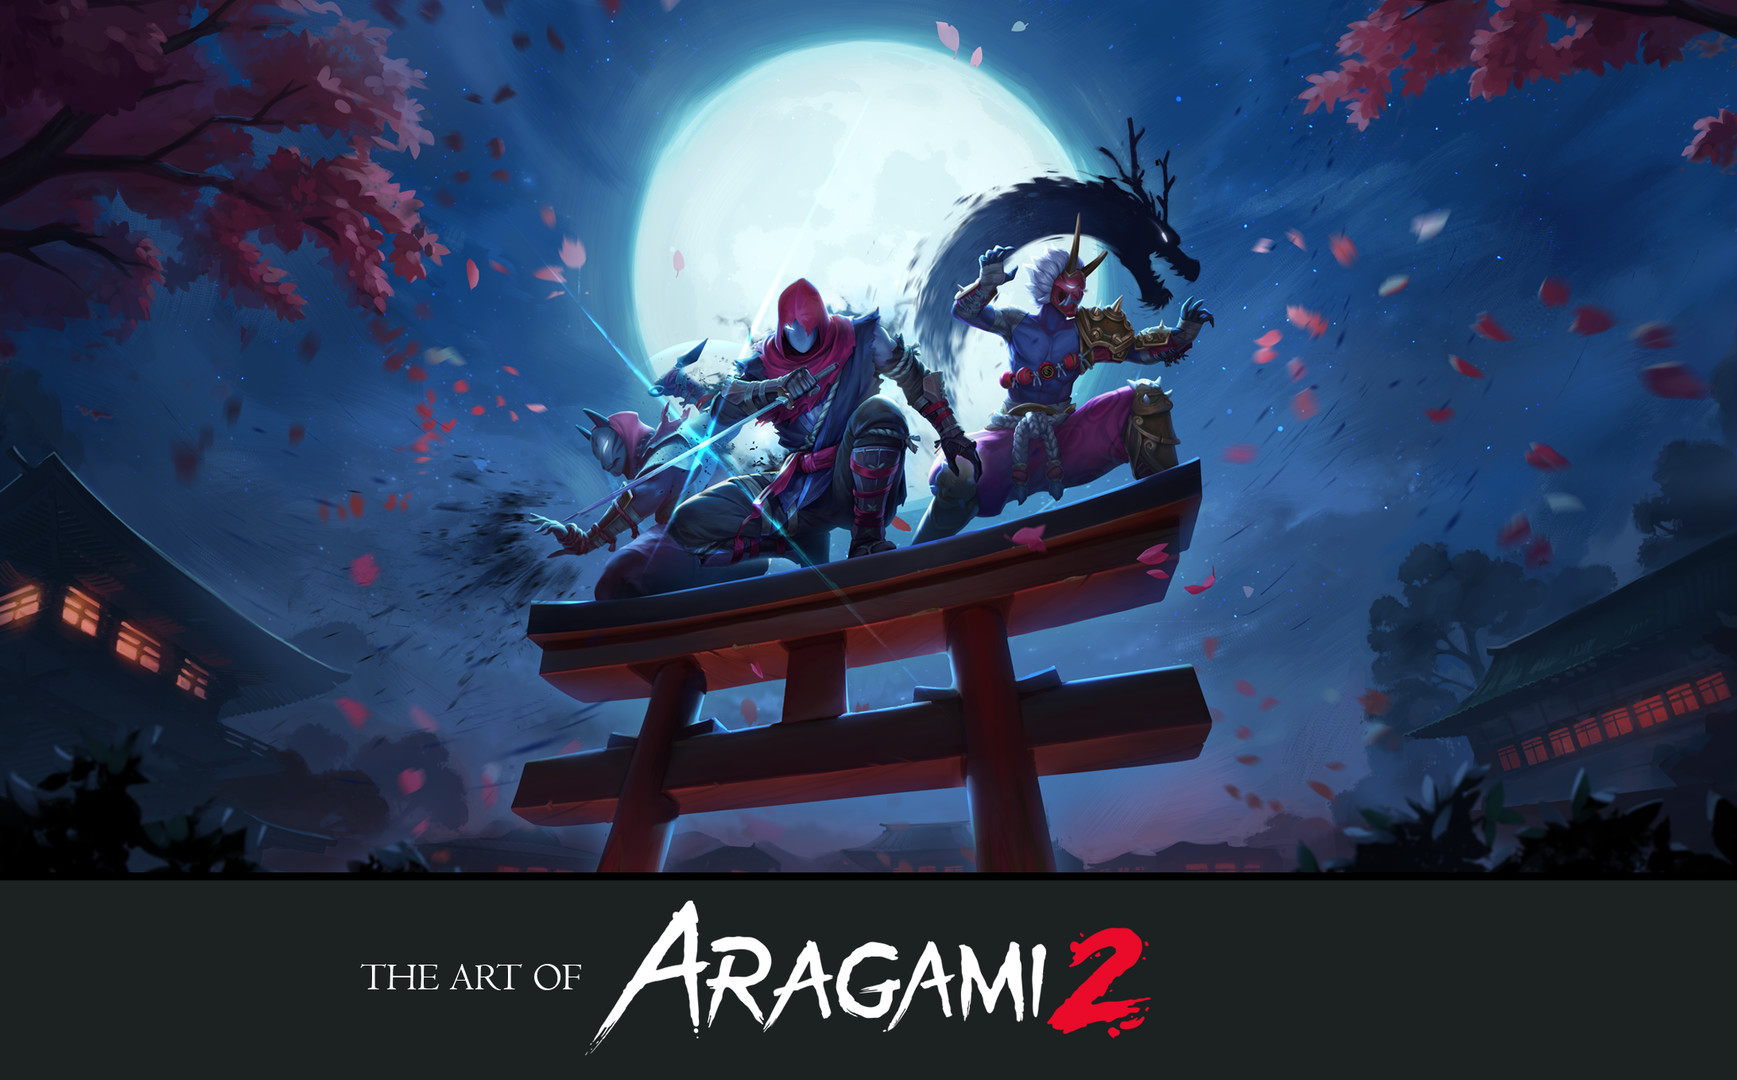 Aragami 2 - Digital Artbook Featured Screenshot #1